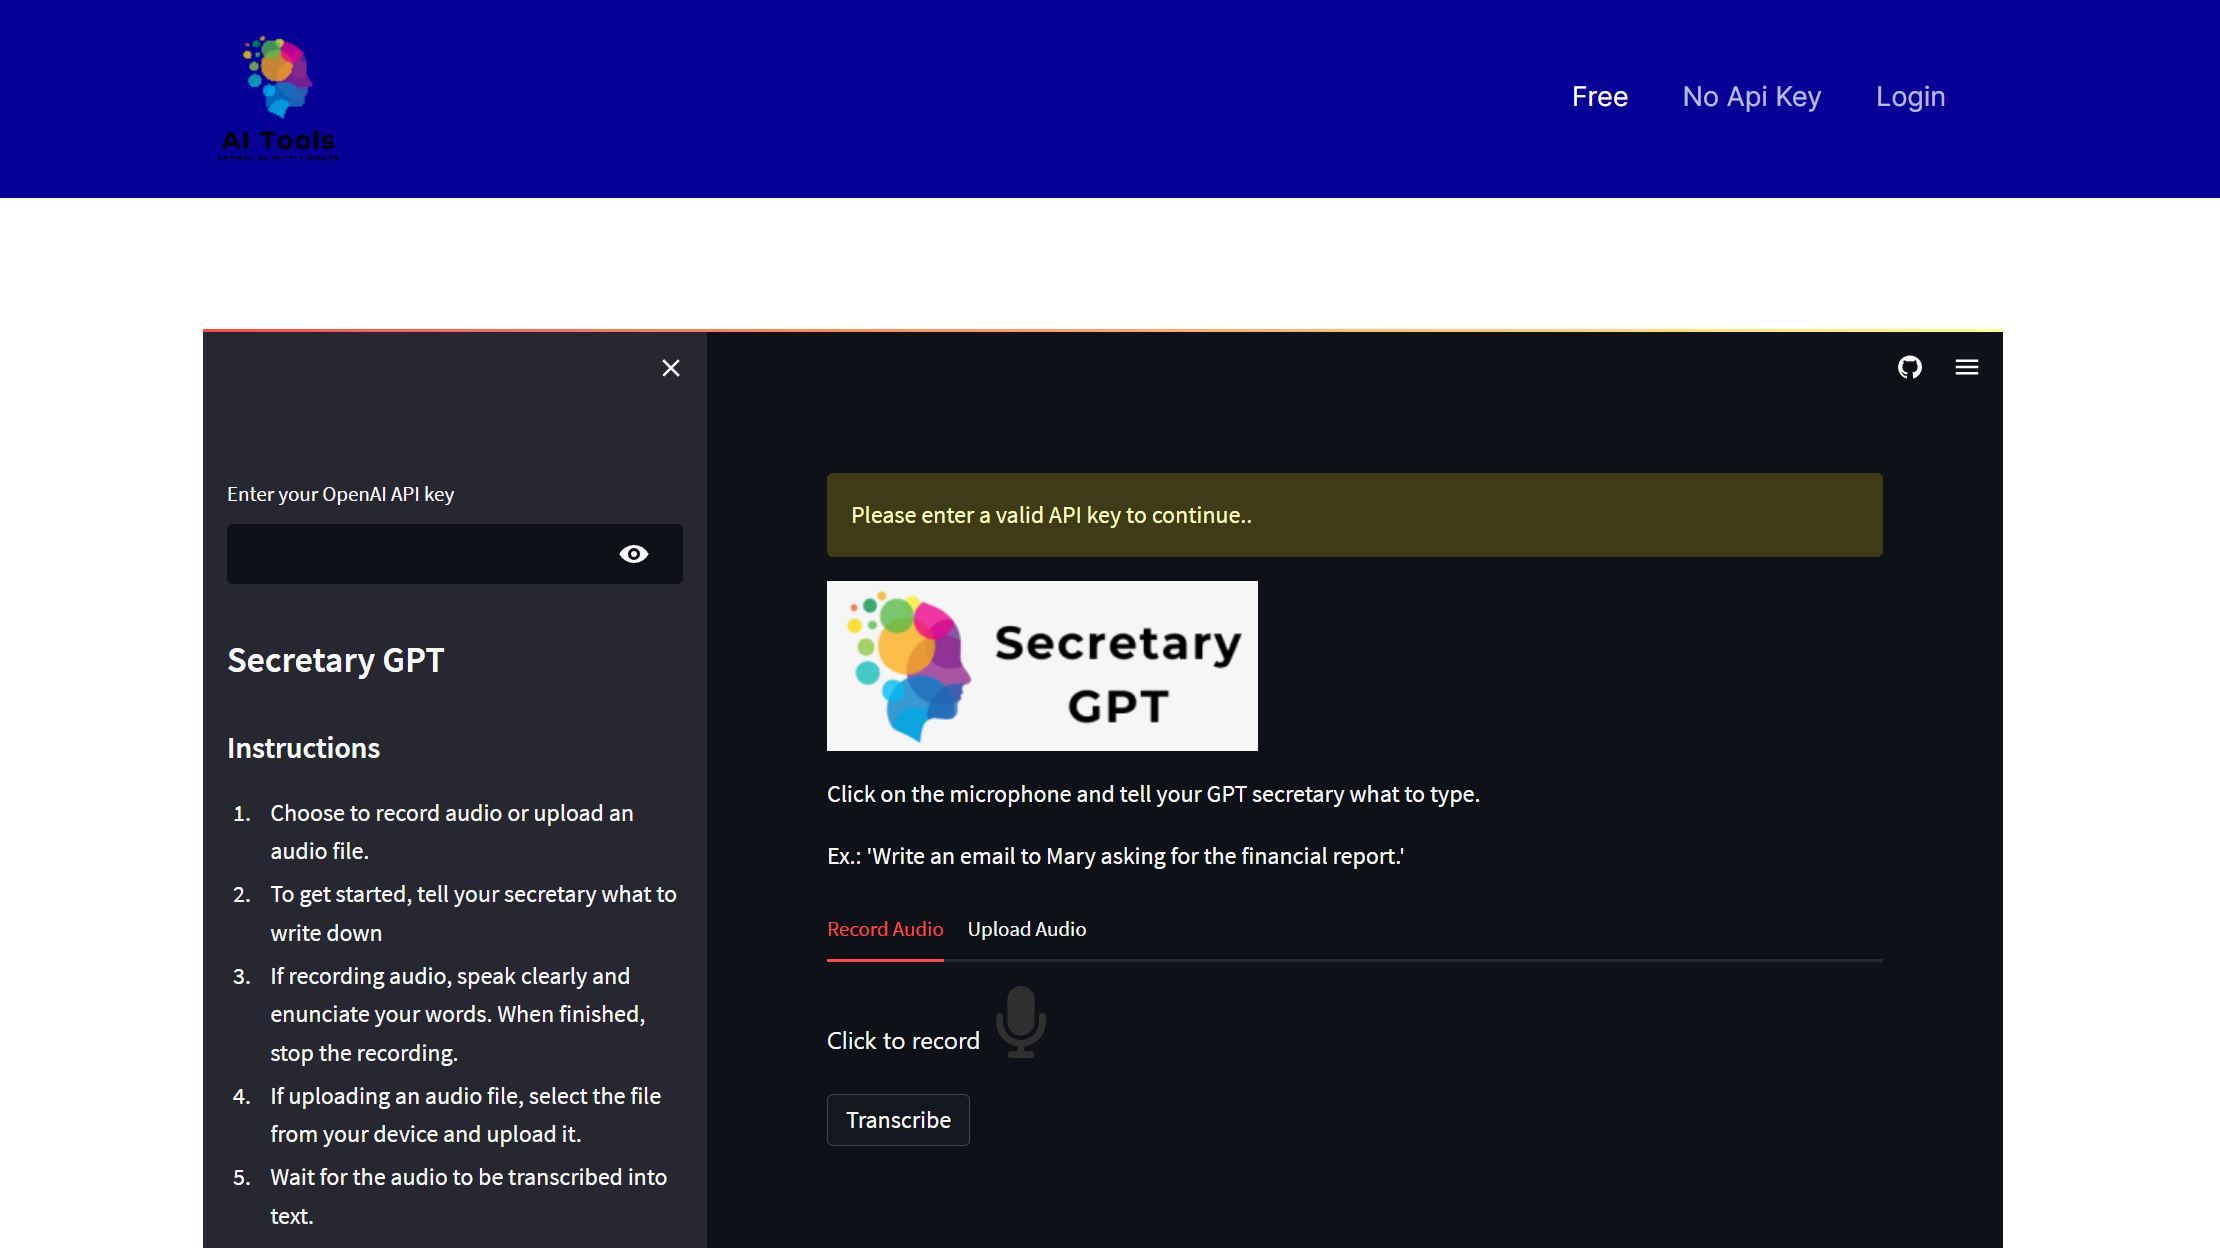 Secretary GPT icon